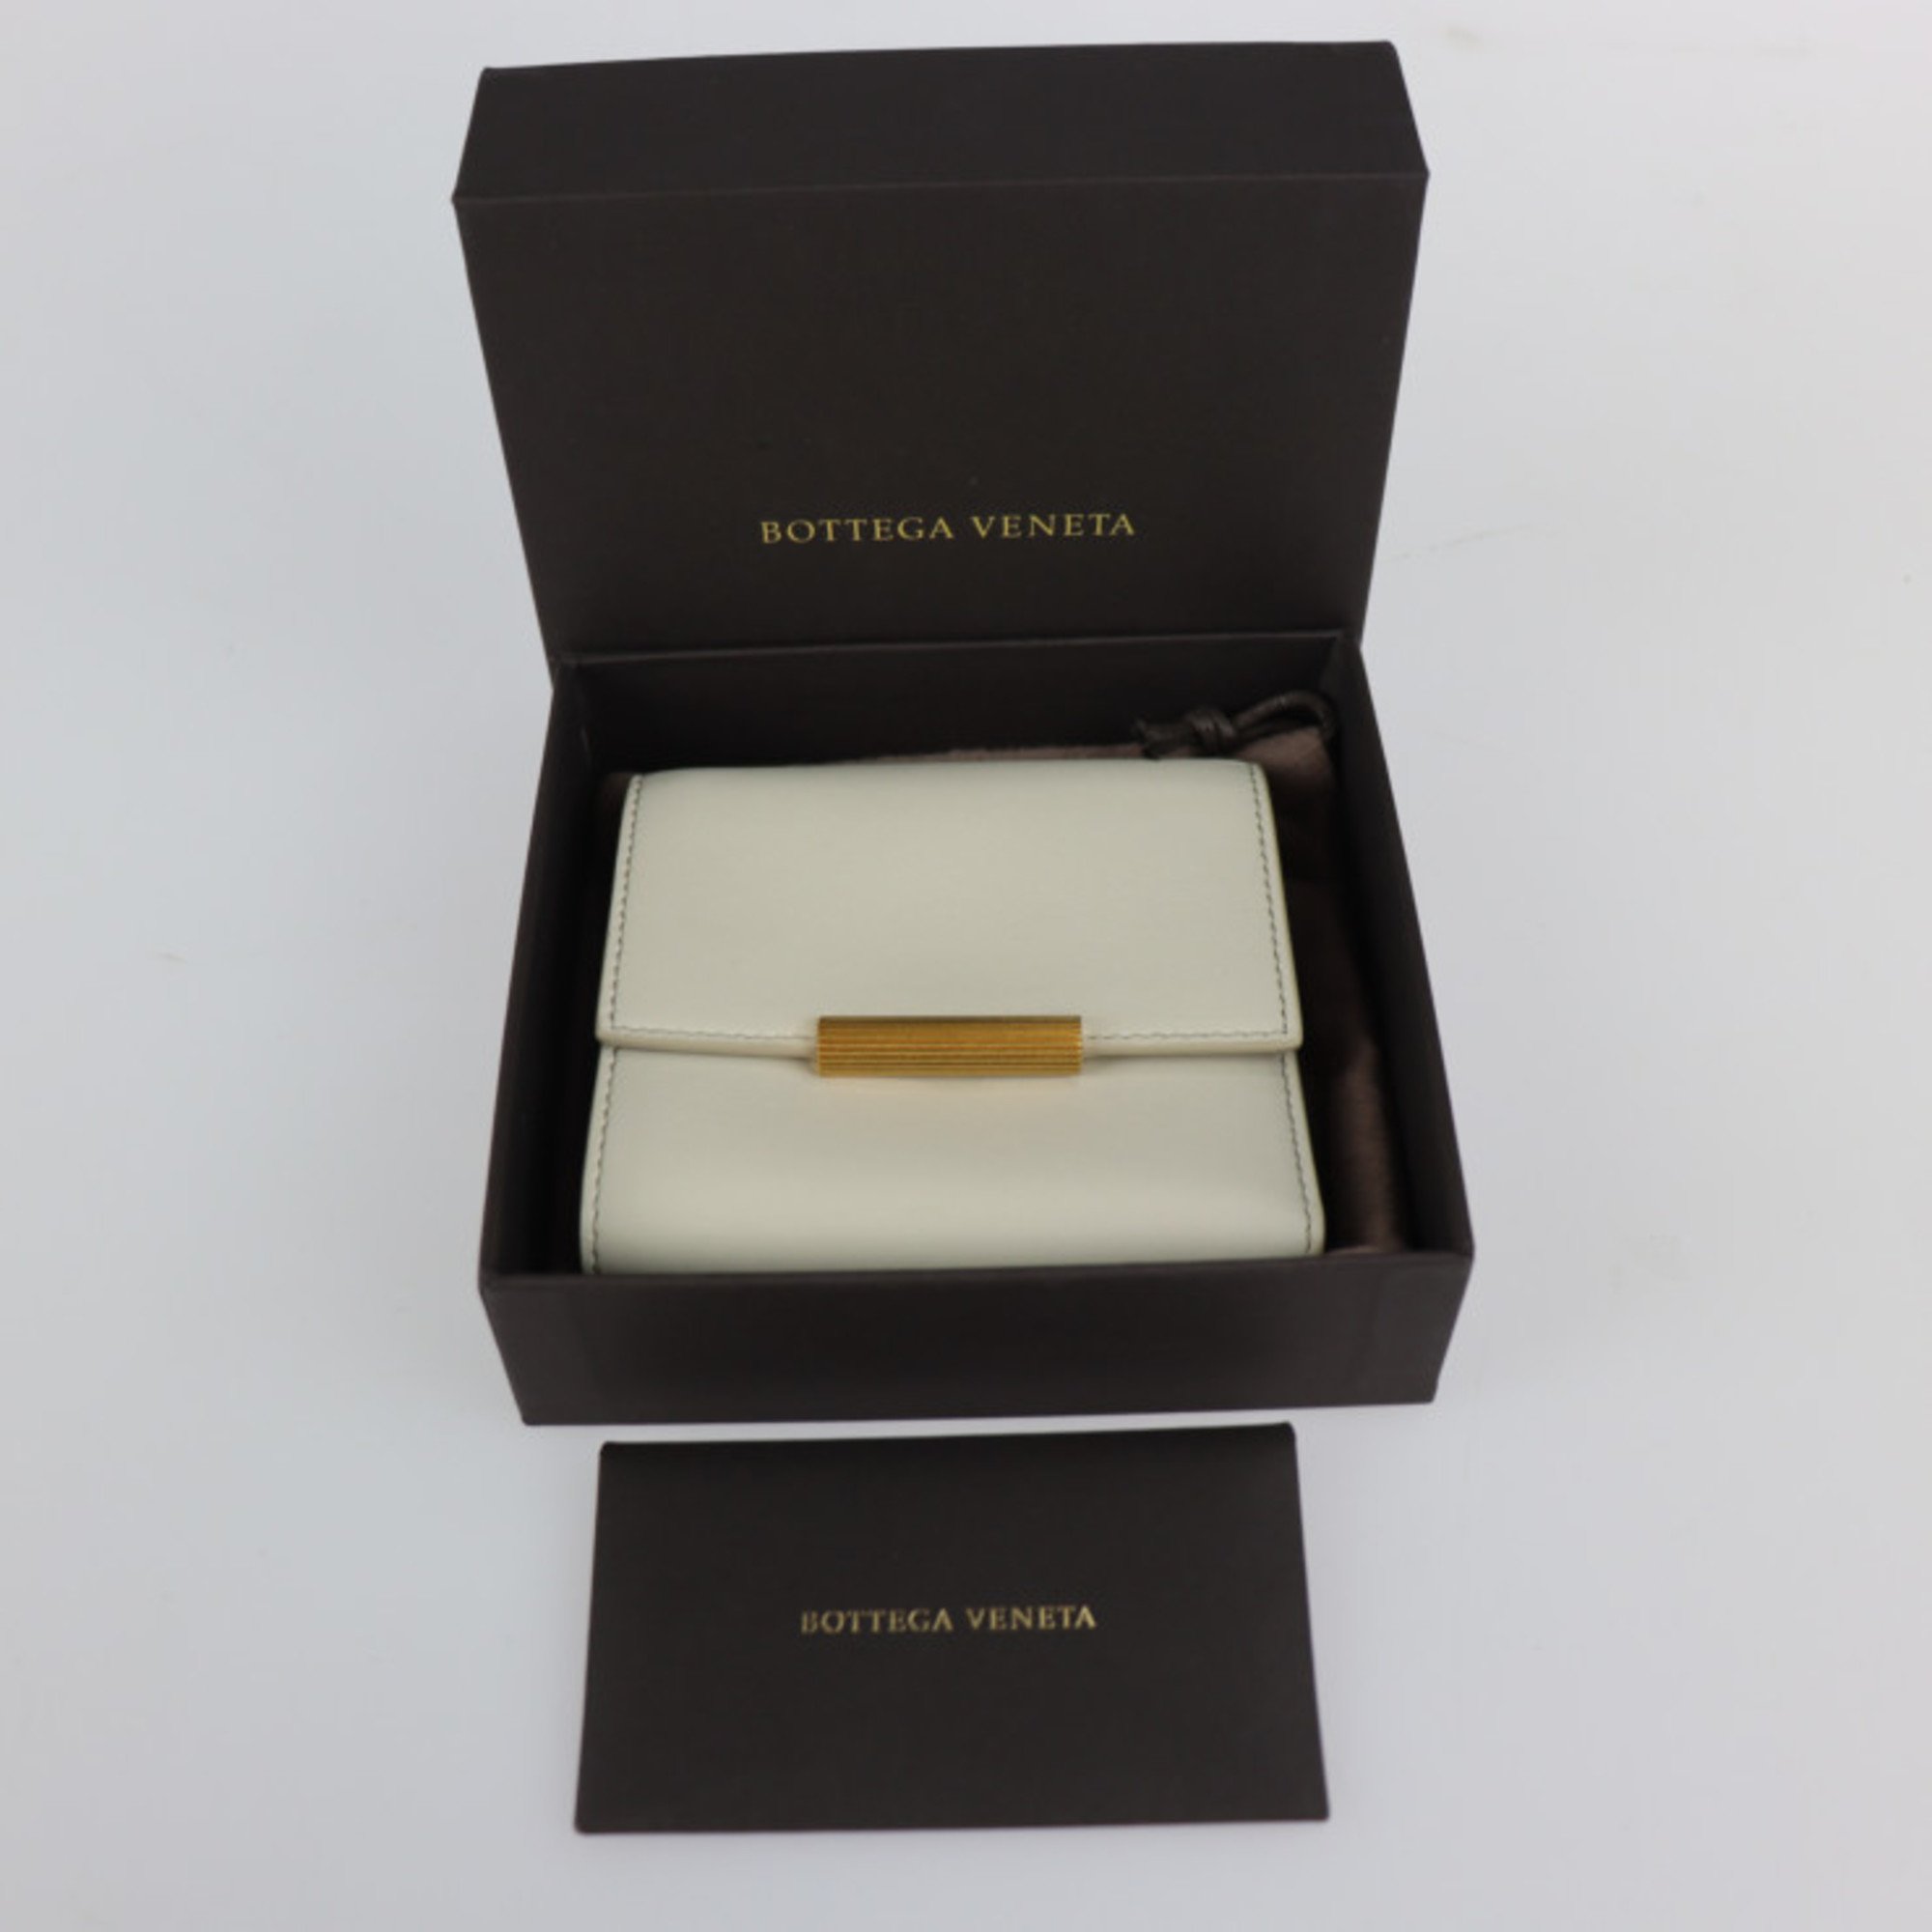 BOTTEGA VENETA Bottega Veneta Trifold Wallet 578752 Calf Leather PLASTER White Series Gold Hardware Compact